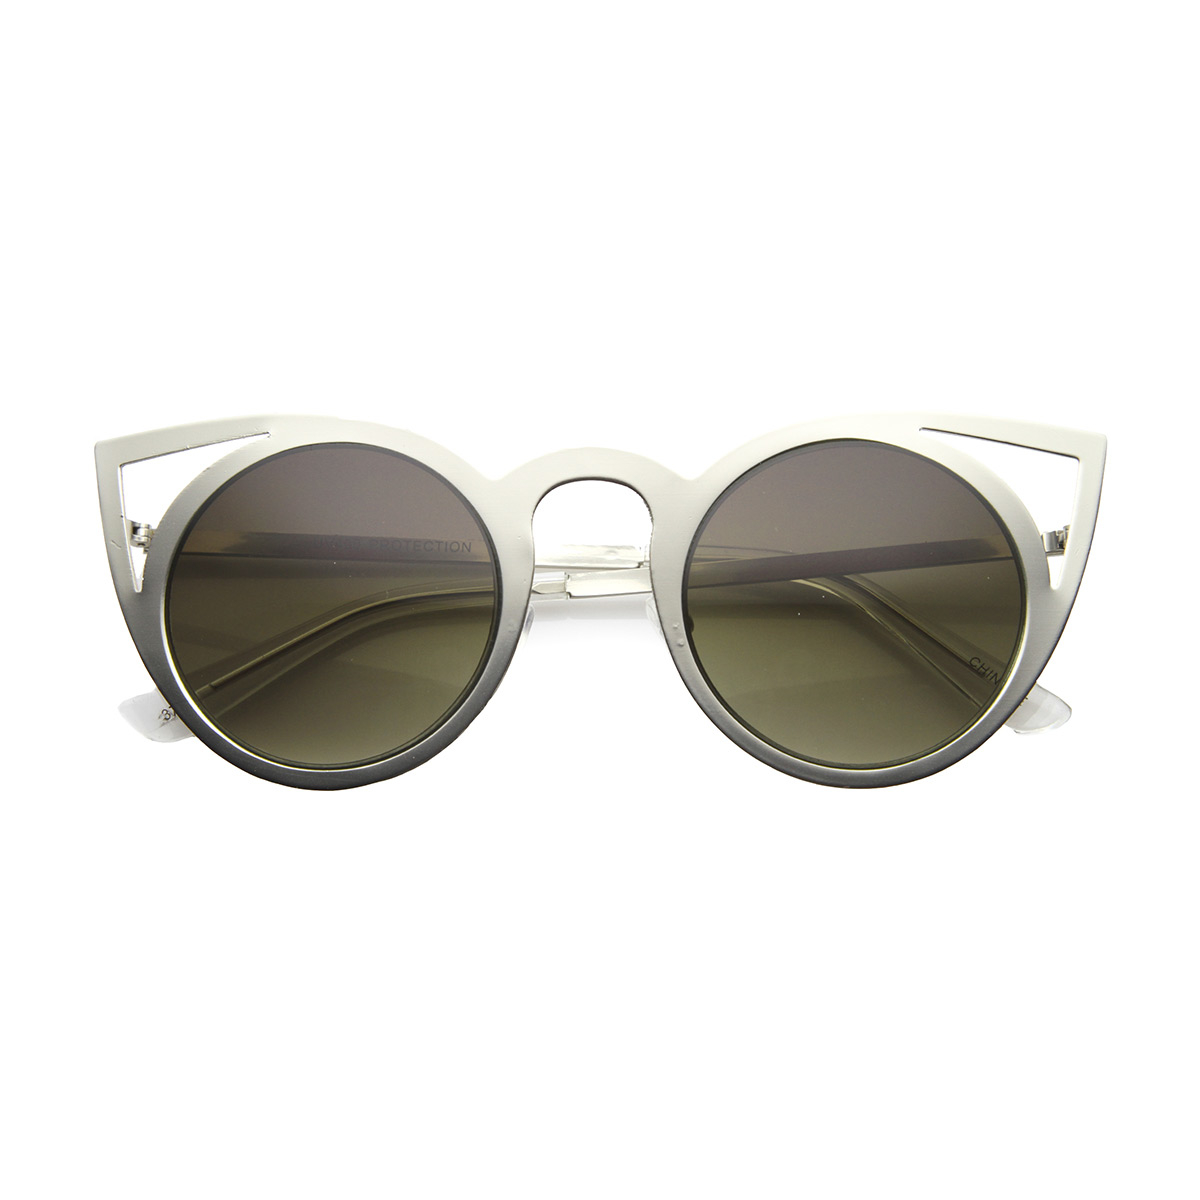 Womens High Fashion Full Round Metal Cut-Out Cat Eye Frame Sunglasses 9788 - Gunmetal / Green